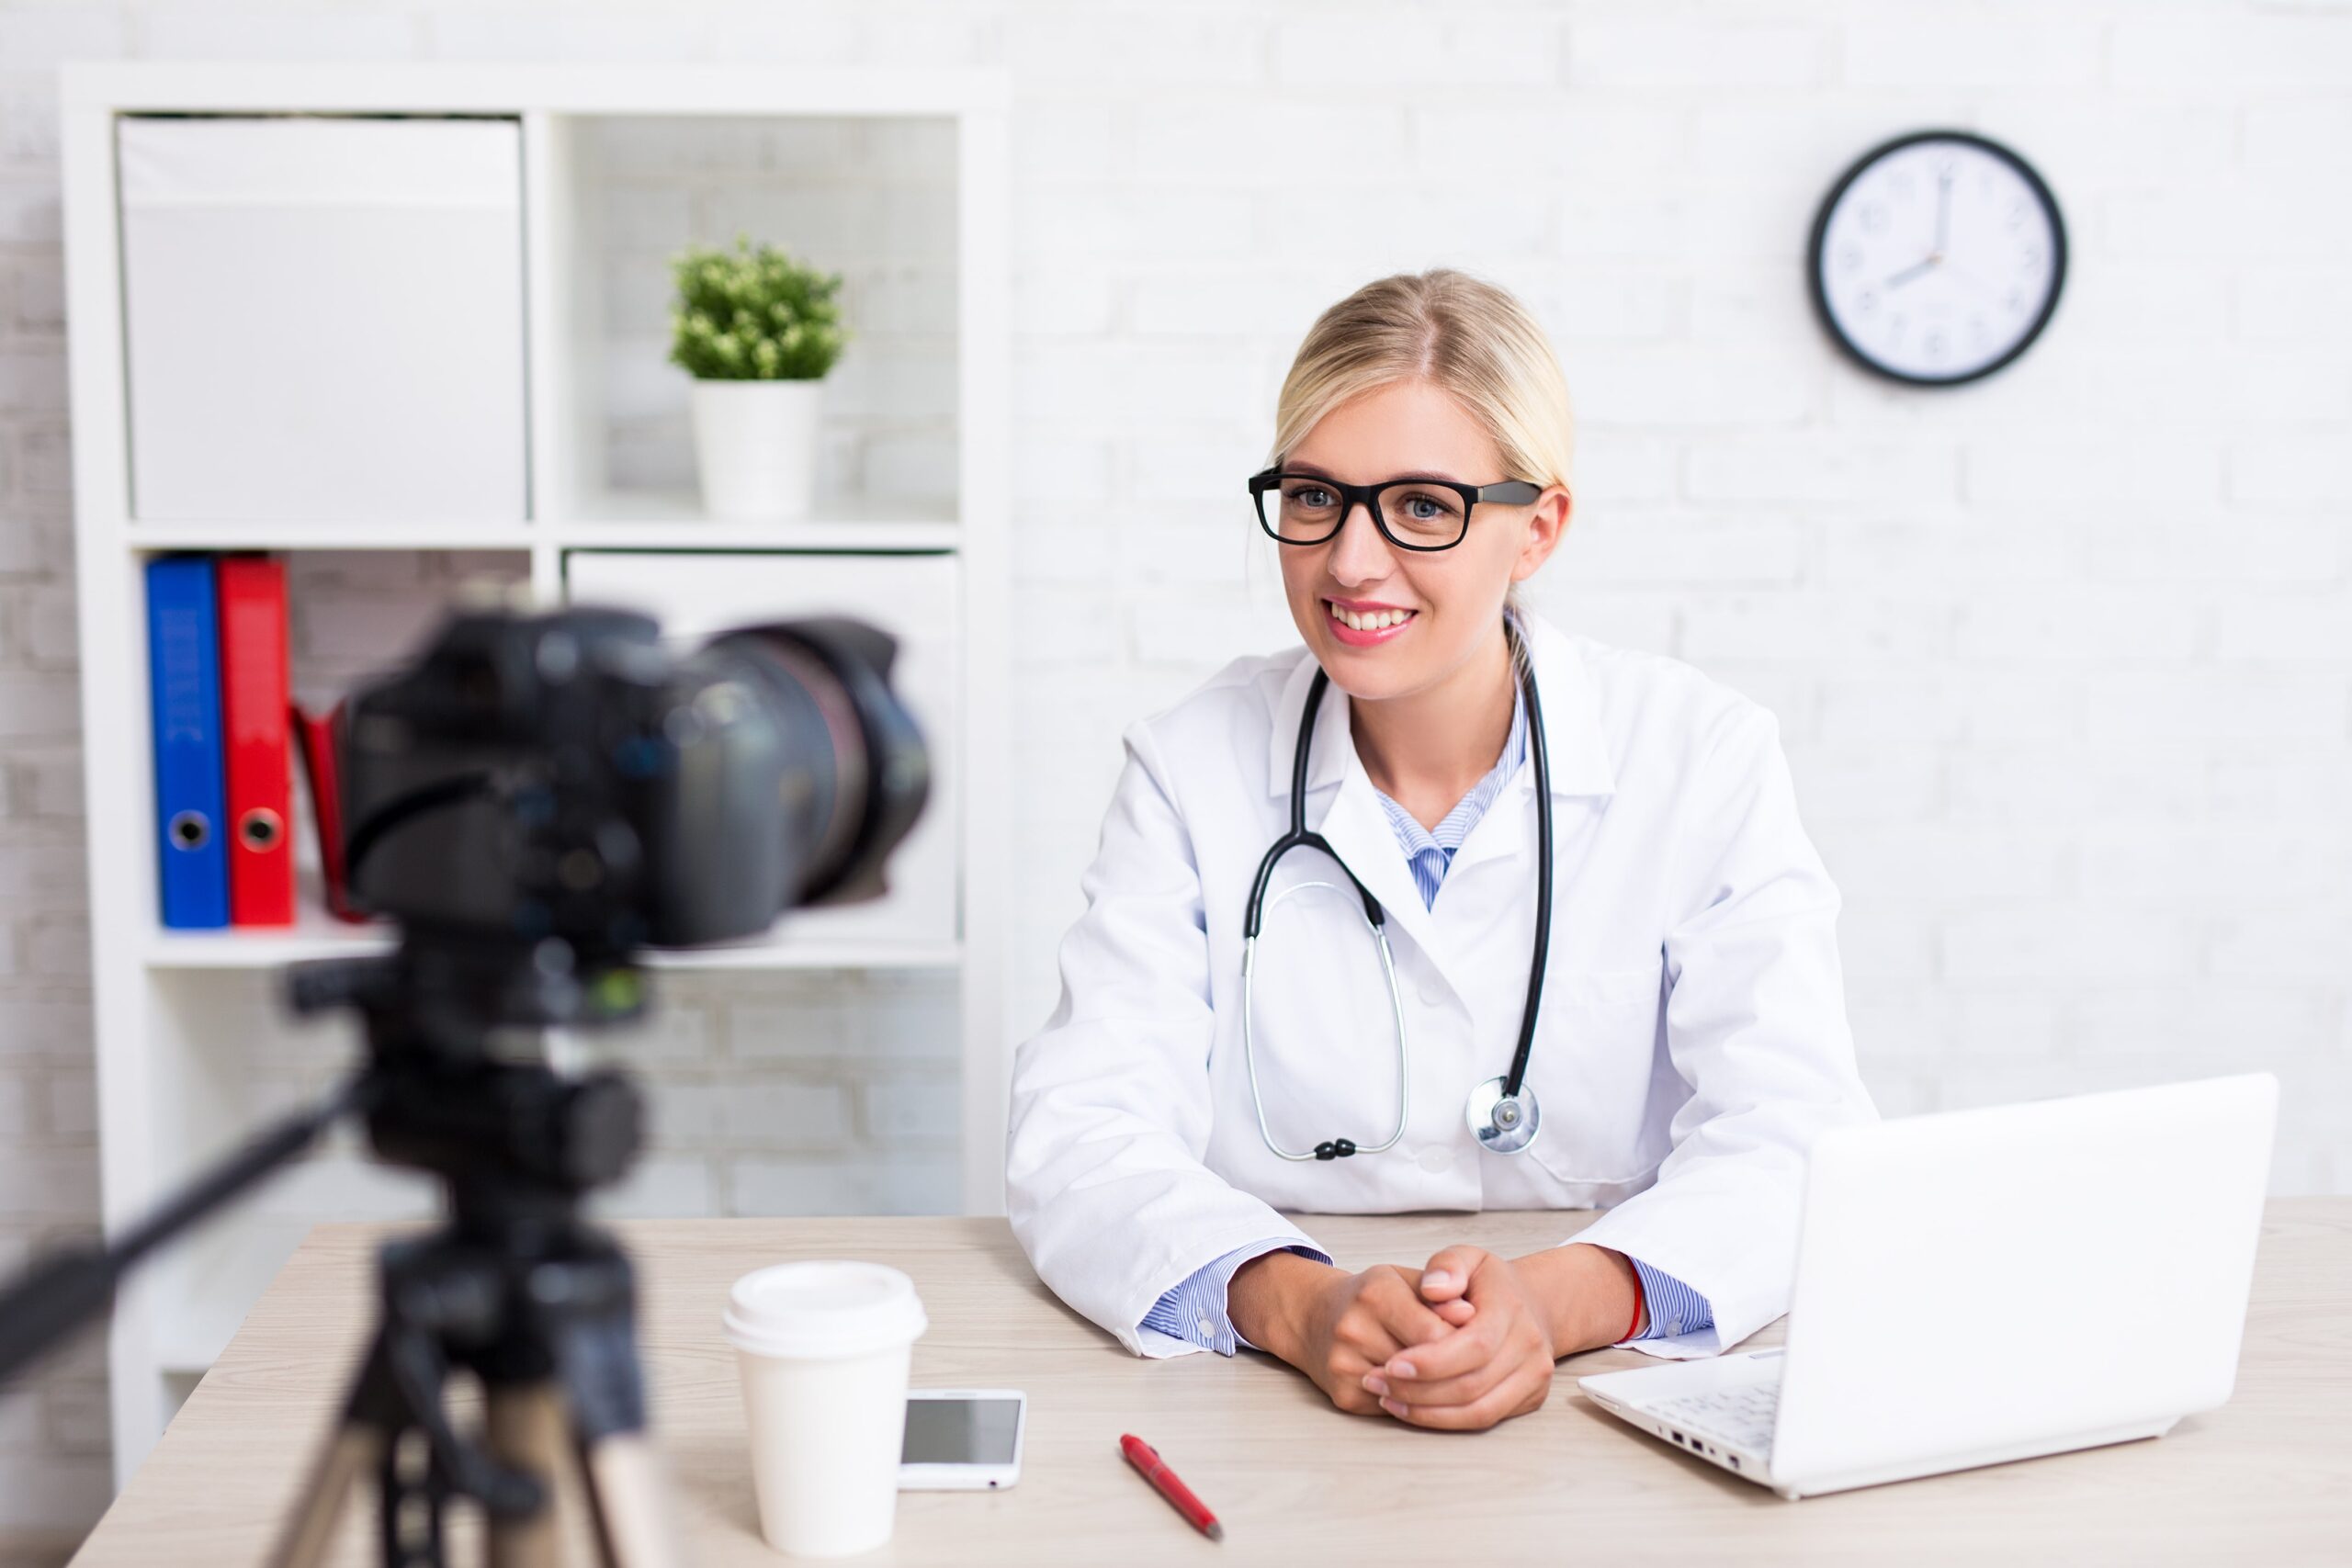 Should Doctors Use Video on Social Media?